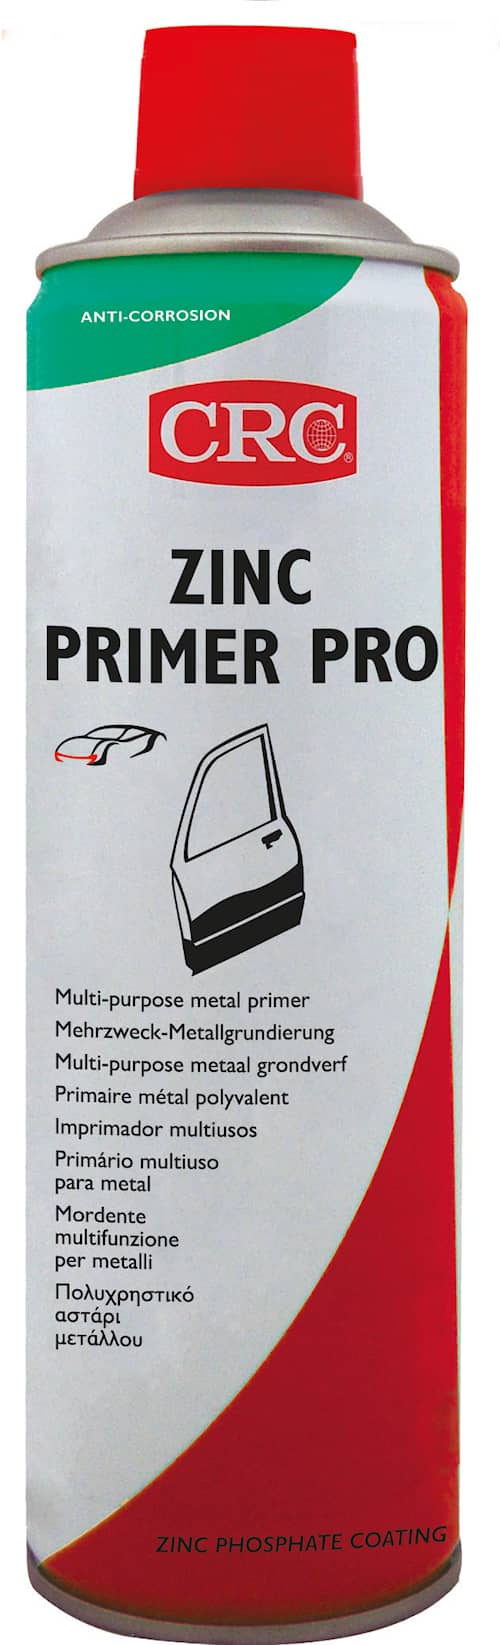 CRC Zink Primer PRO 500ml